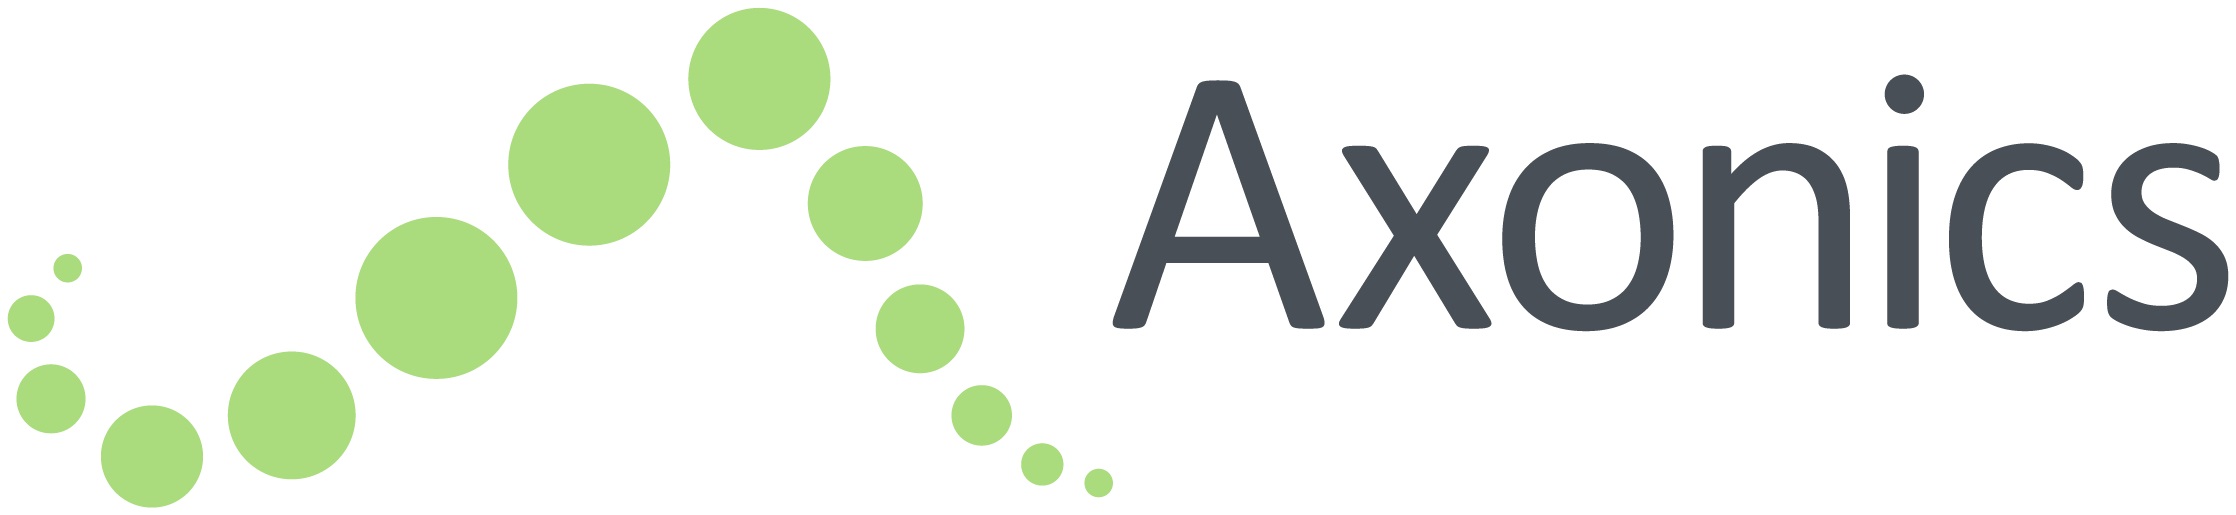 Axonics logocolor no taglarge_1.jpg